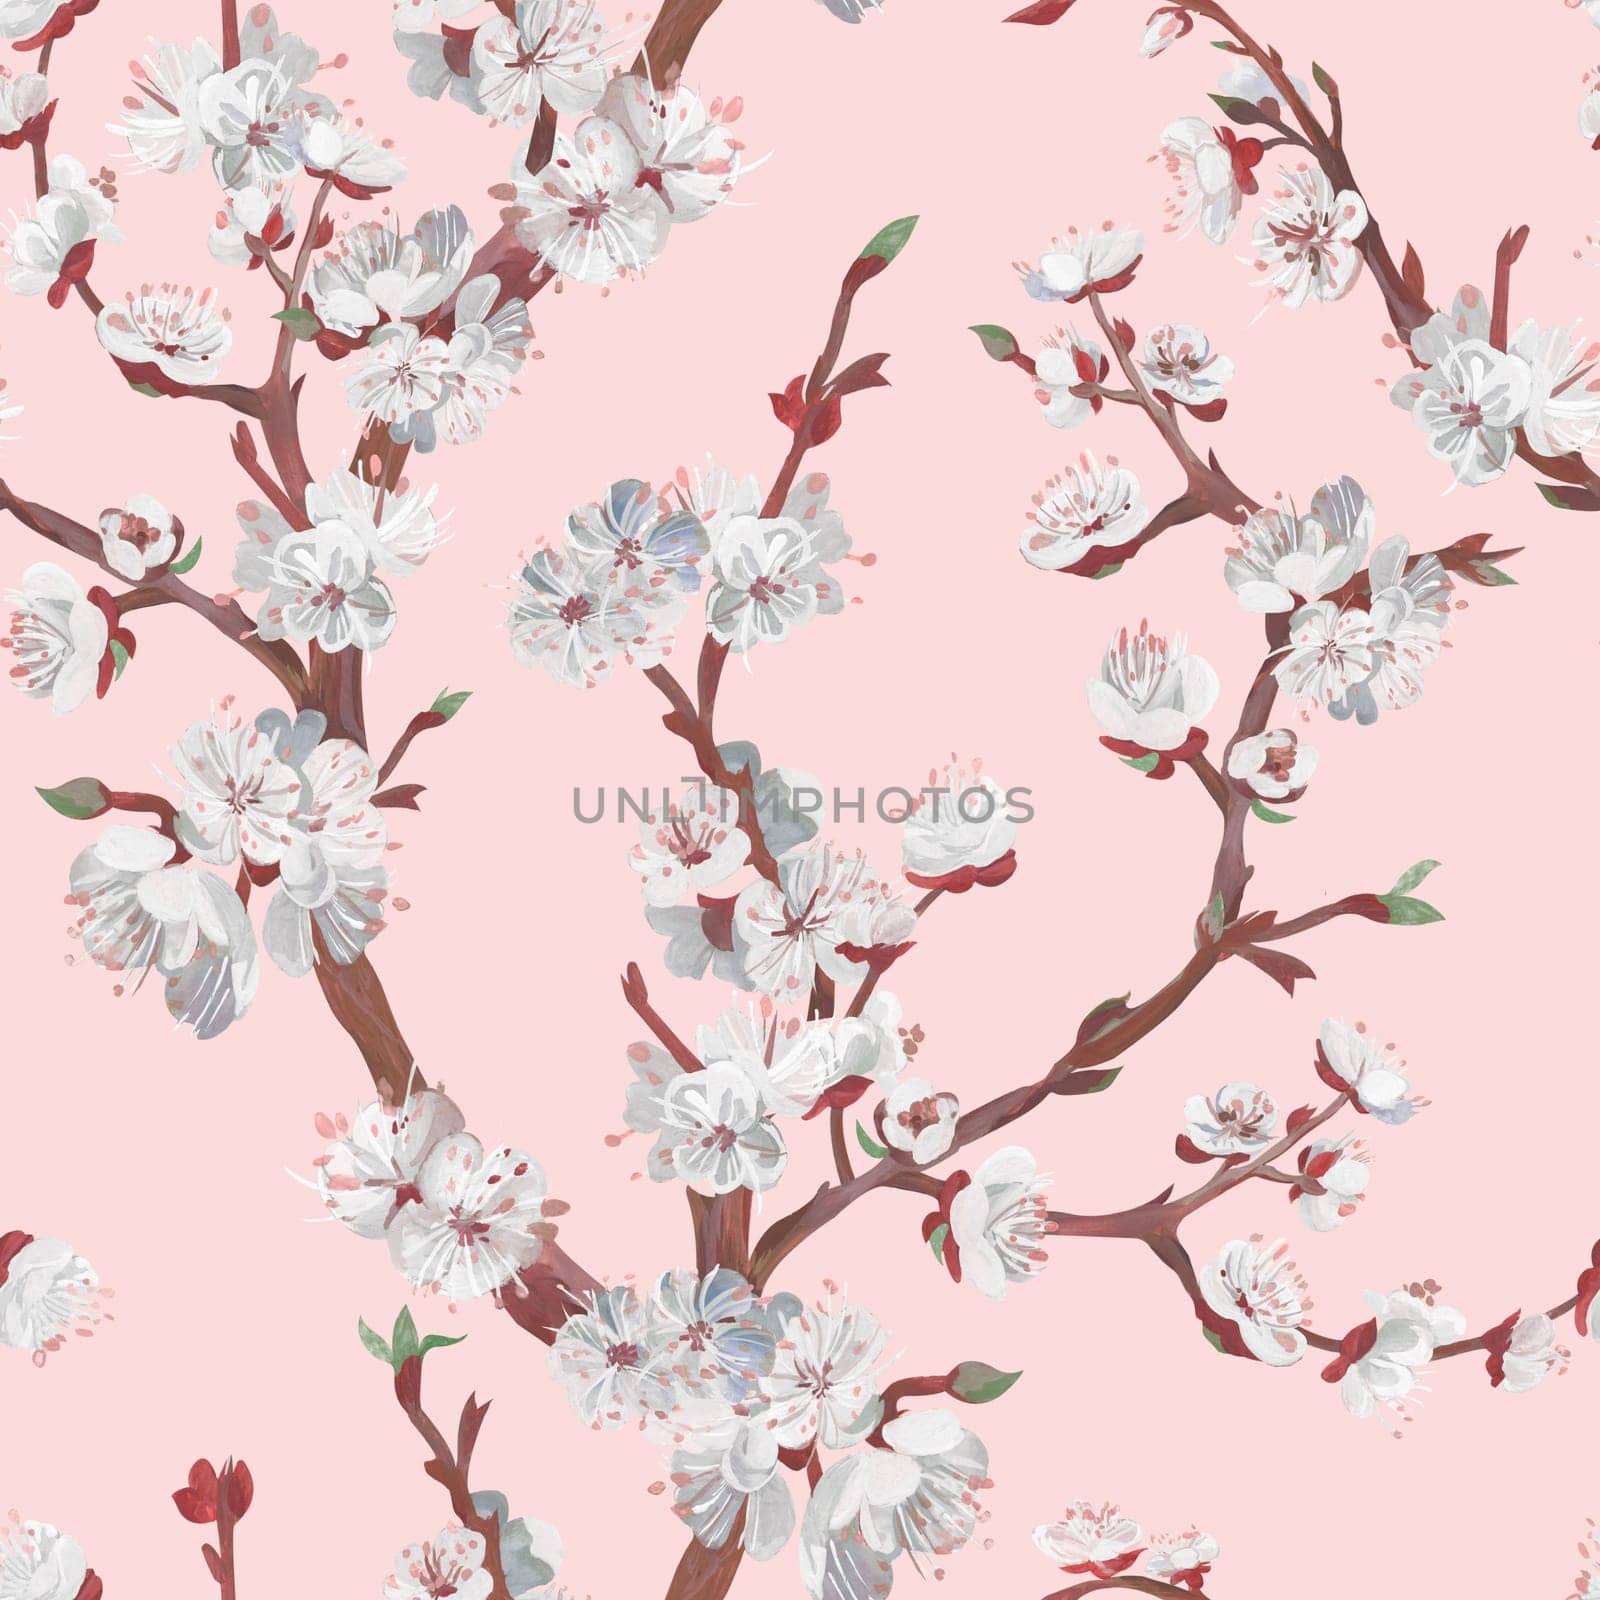 Botanical seamless pattern with sakura cherry branch drawn in gouache by MarinaVoyush